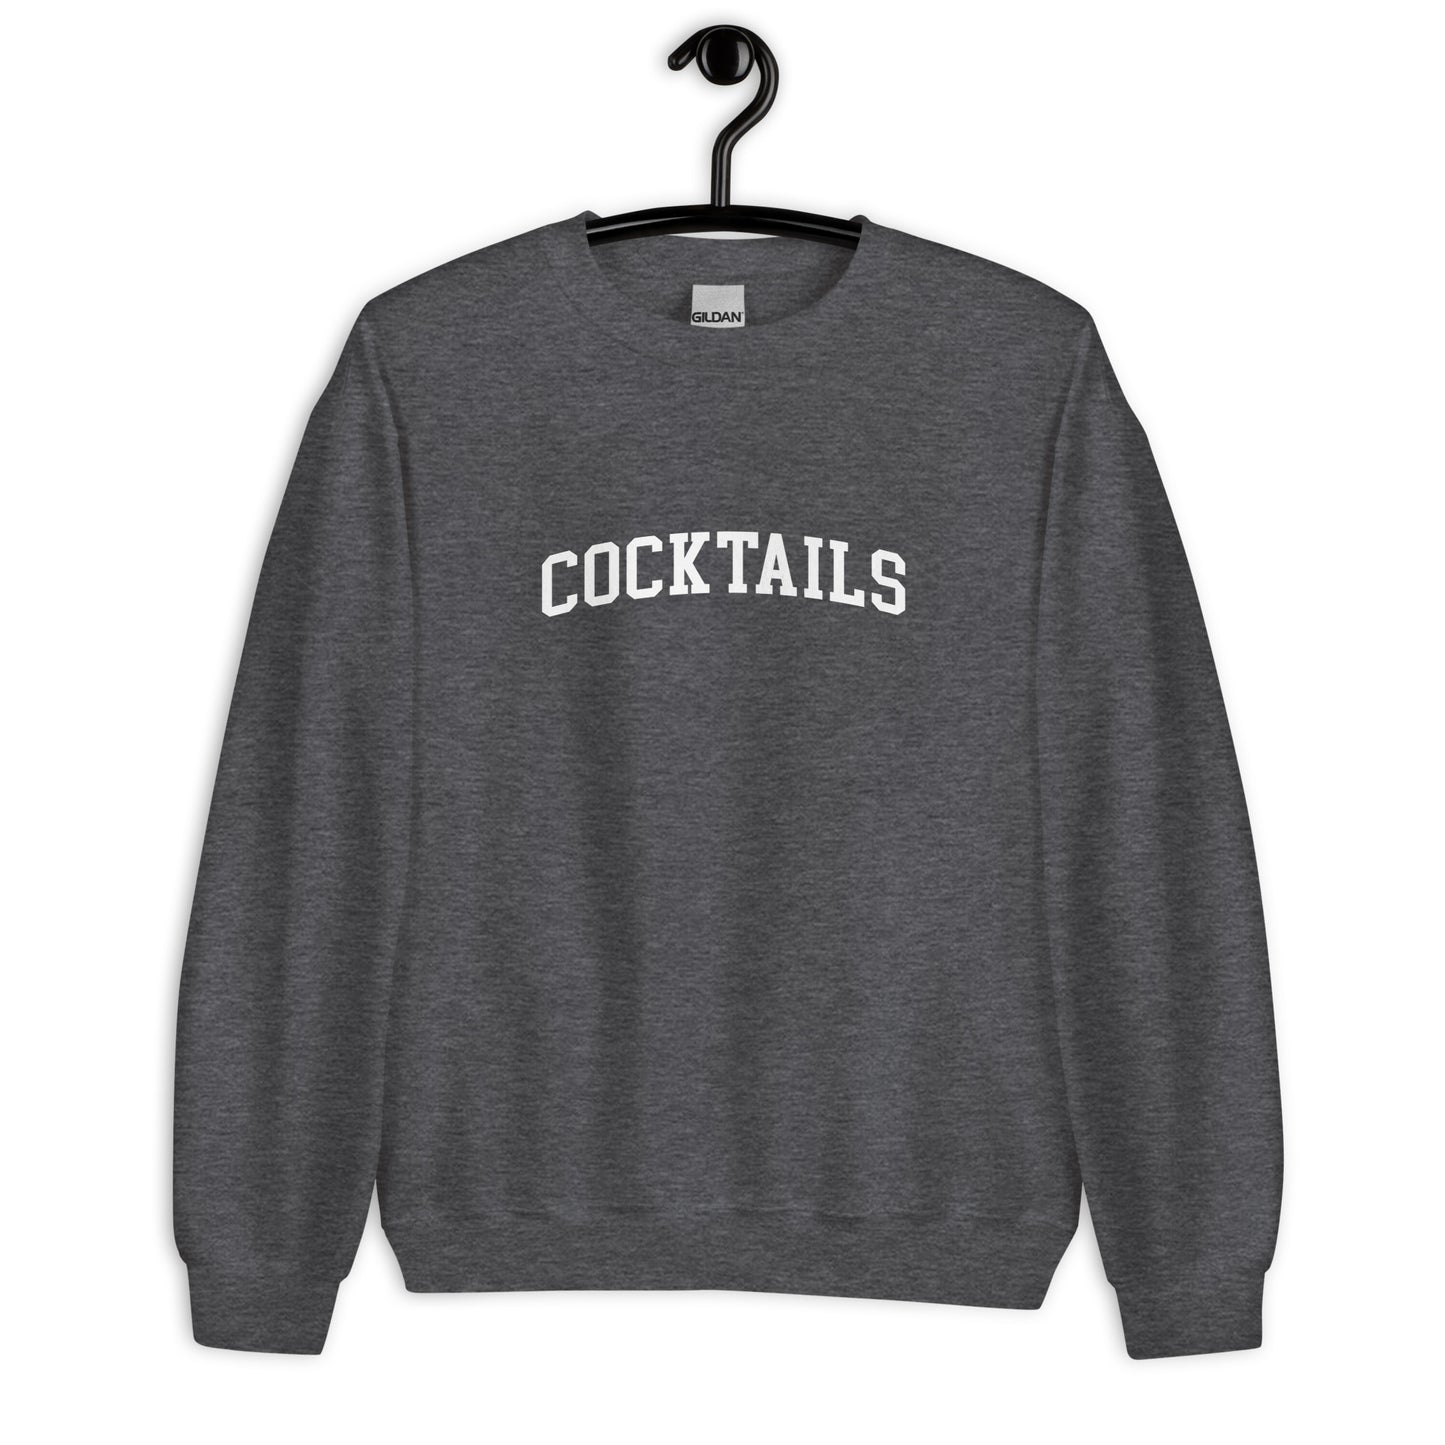 Cocktails Sweatshirt - Arched Font